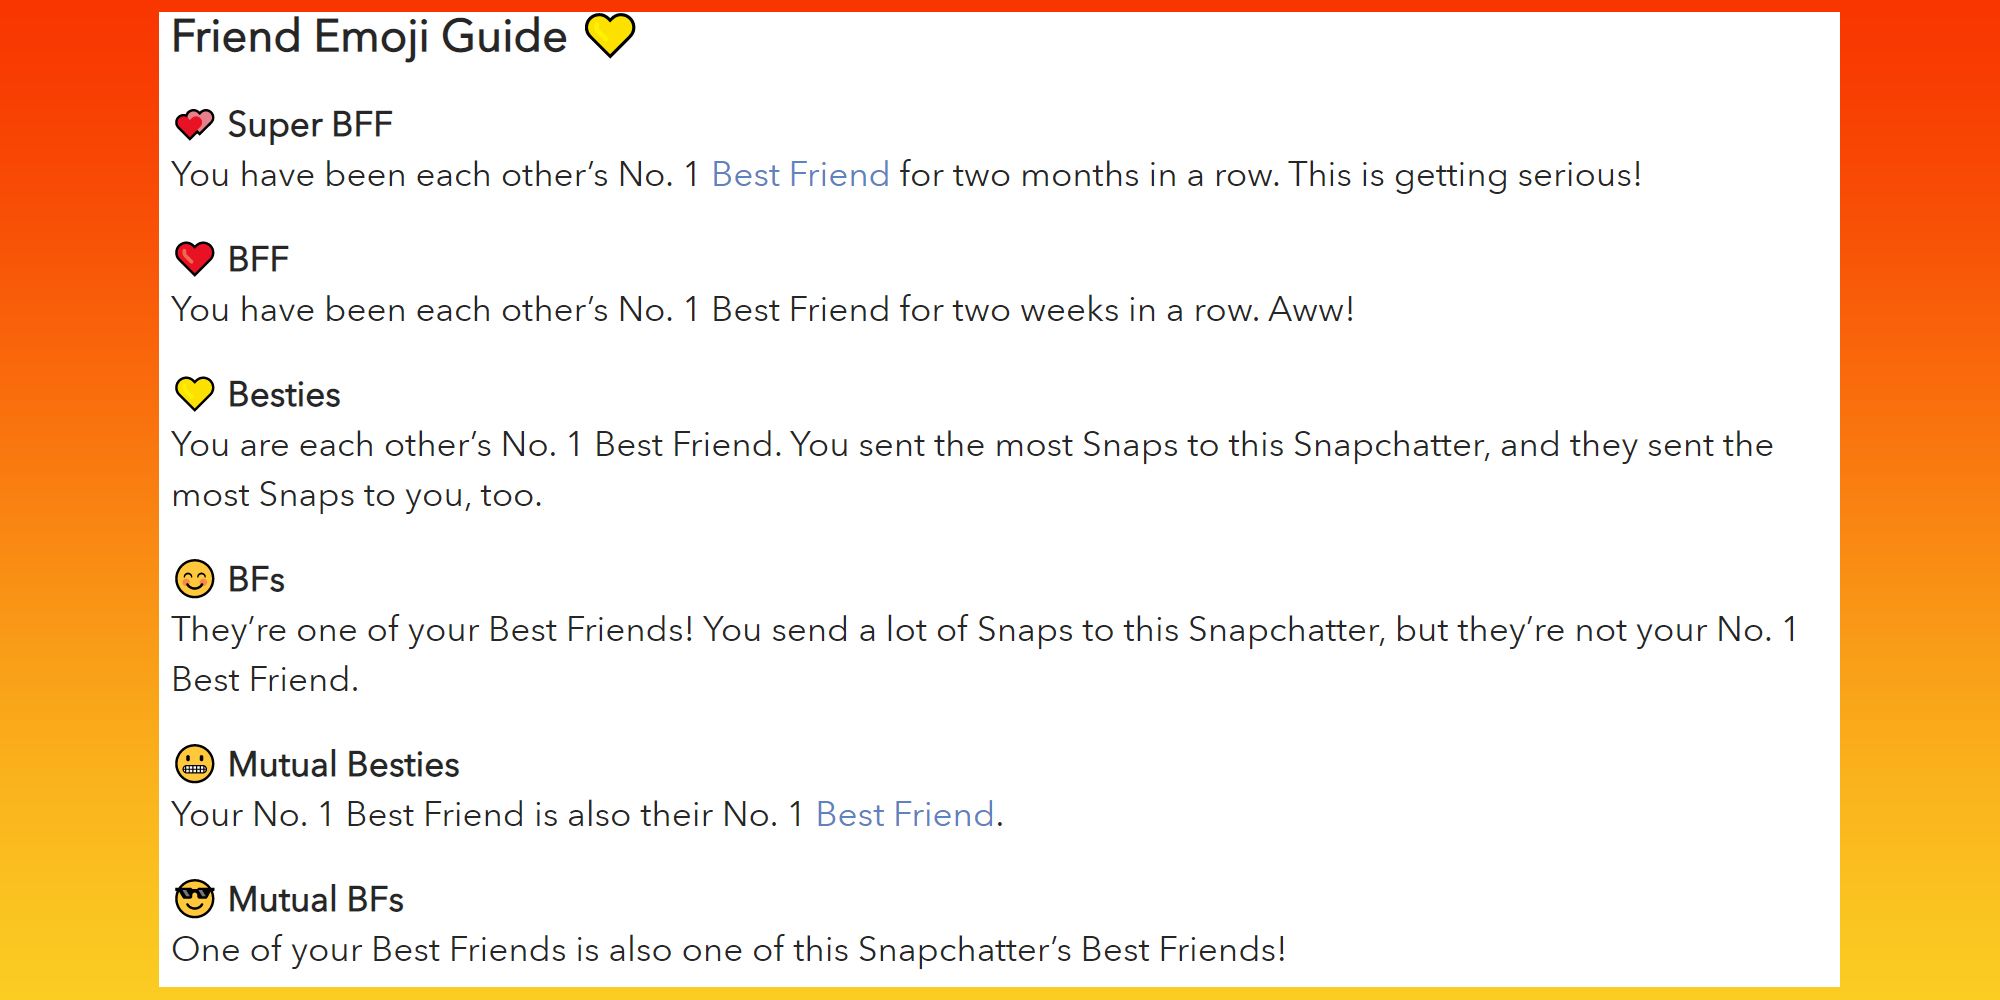 Snapchat Friend Emoji Guide